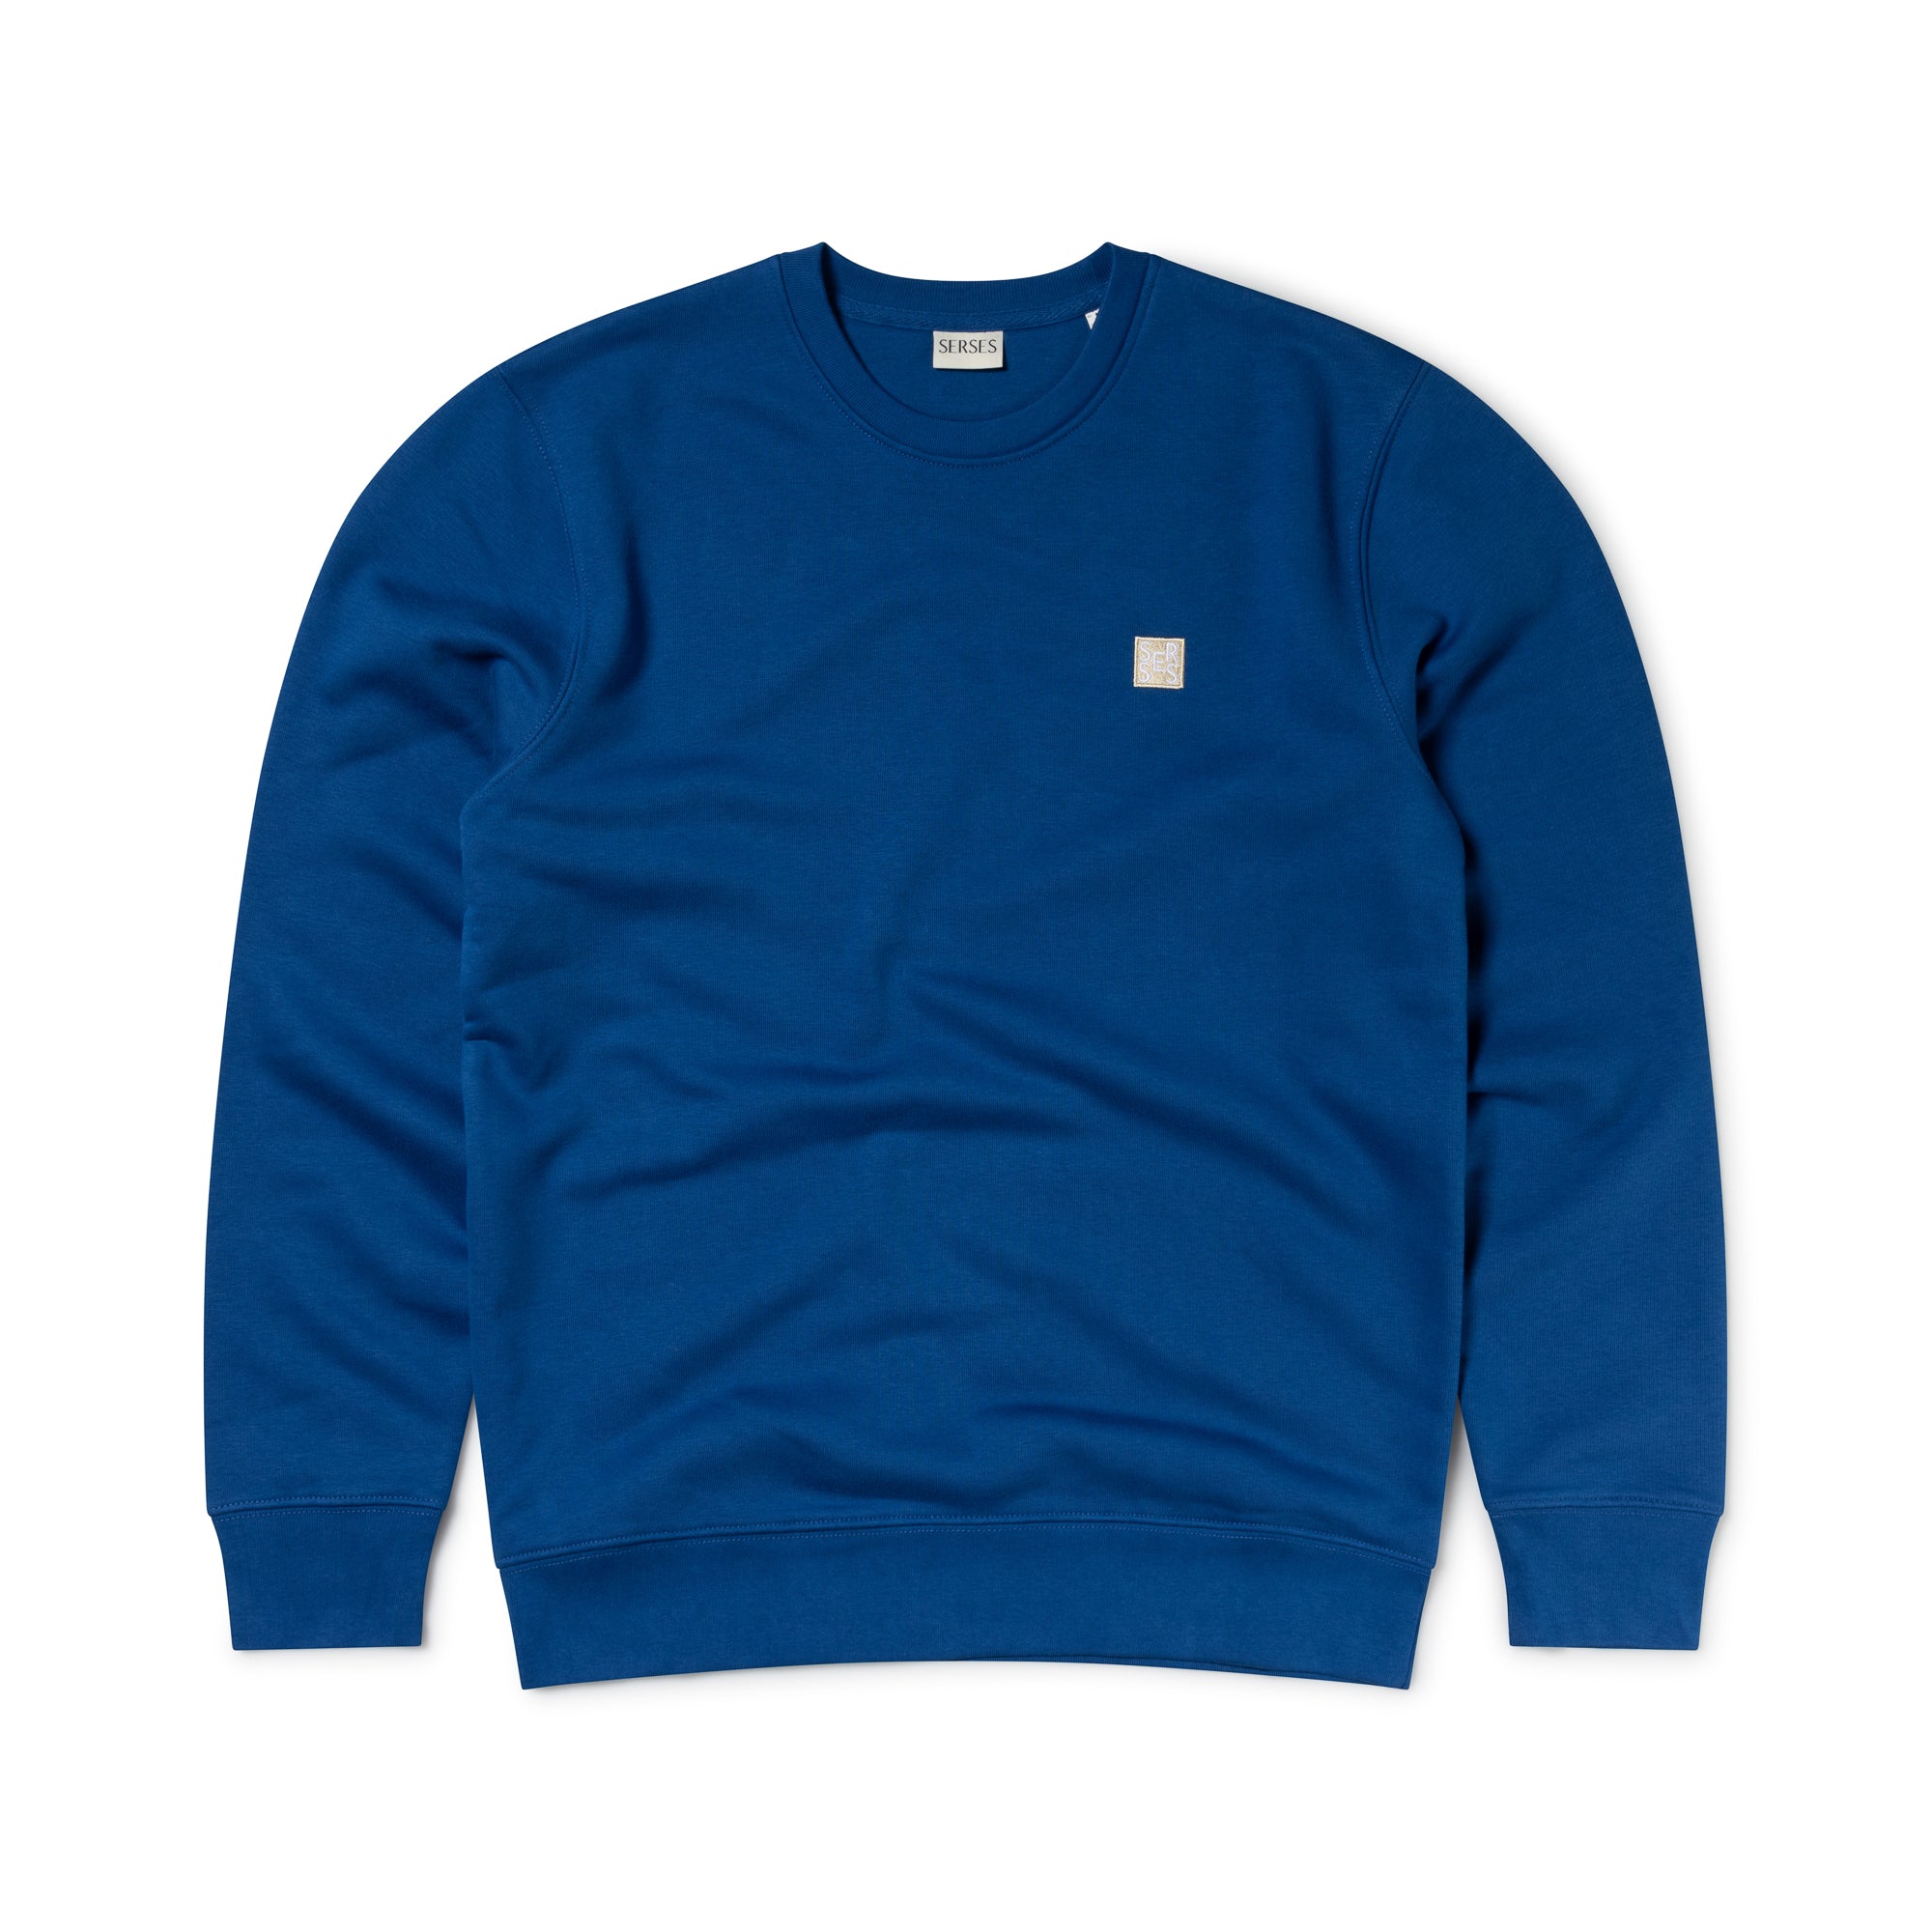 Monogram Organic Sweatshirt in Royal Blue